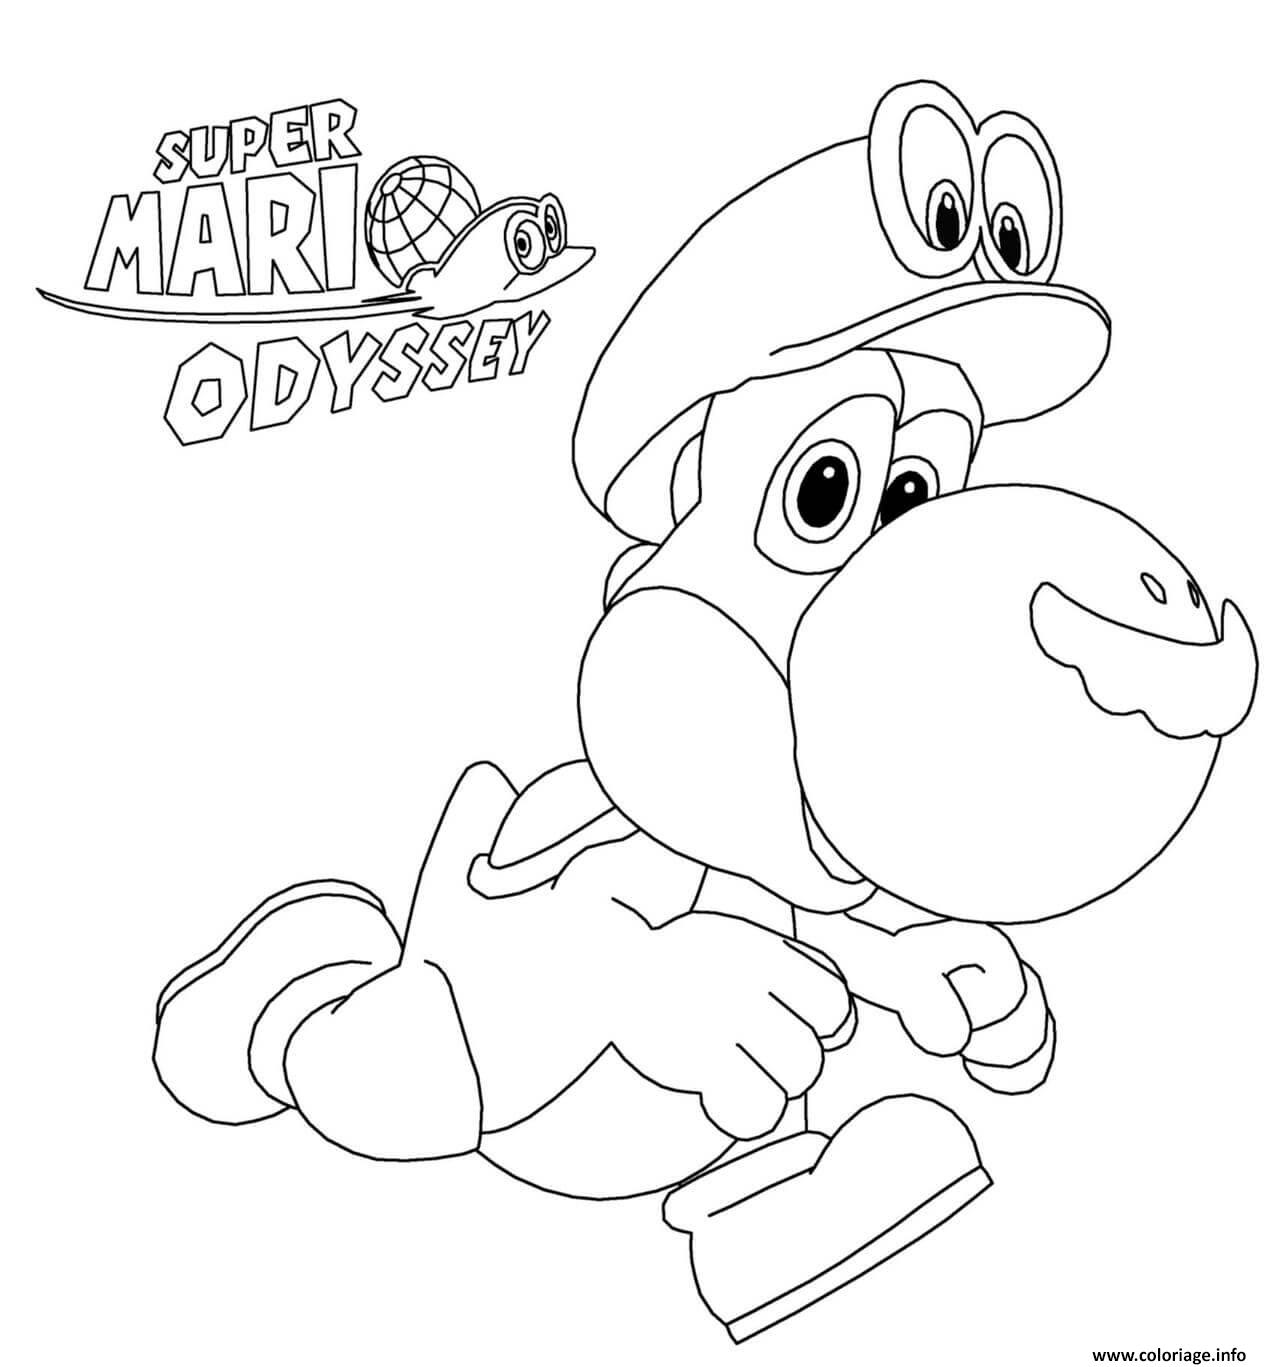 Dessin Yoshi se deguise en Super Mario Odyssey Nintendo Coloriage Gratuit à Imprimer